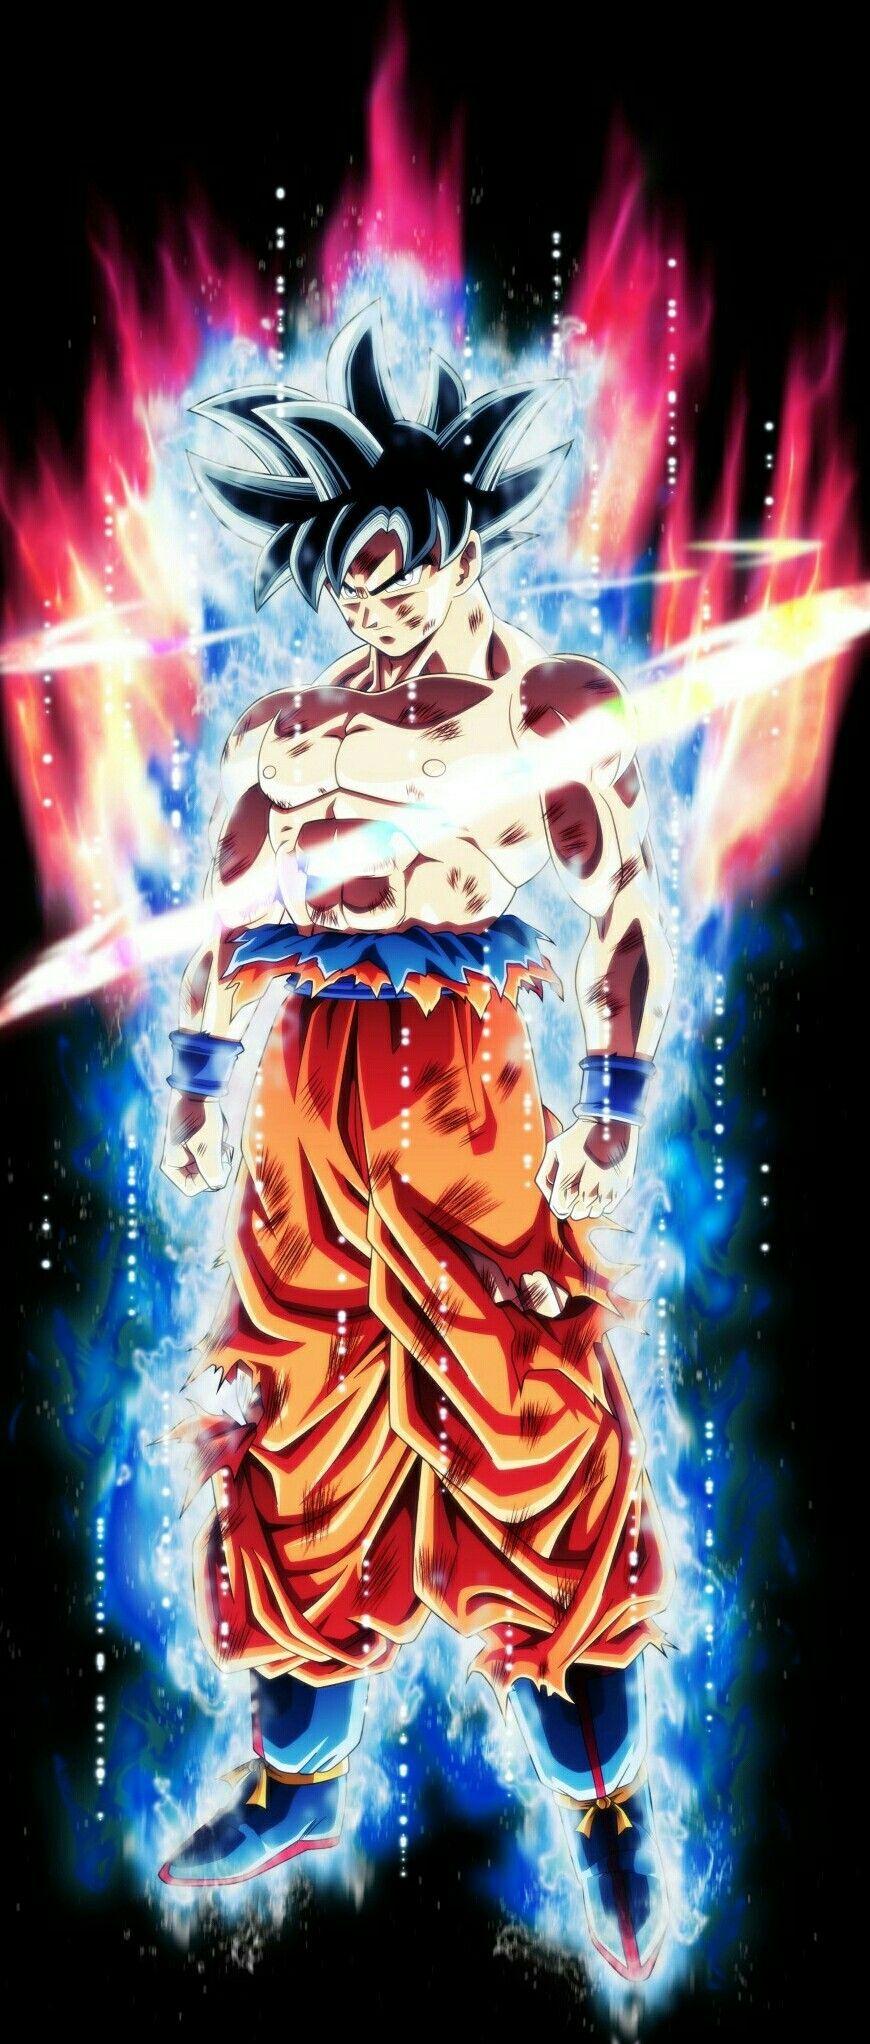 Goku UI Wallpapers - Top Free Goku UI Backgrounds 